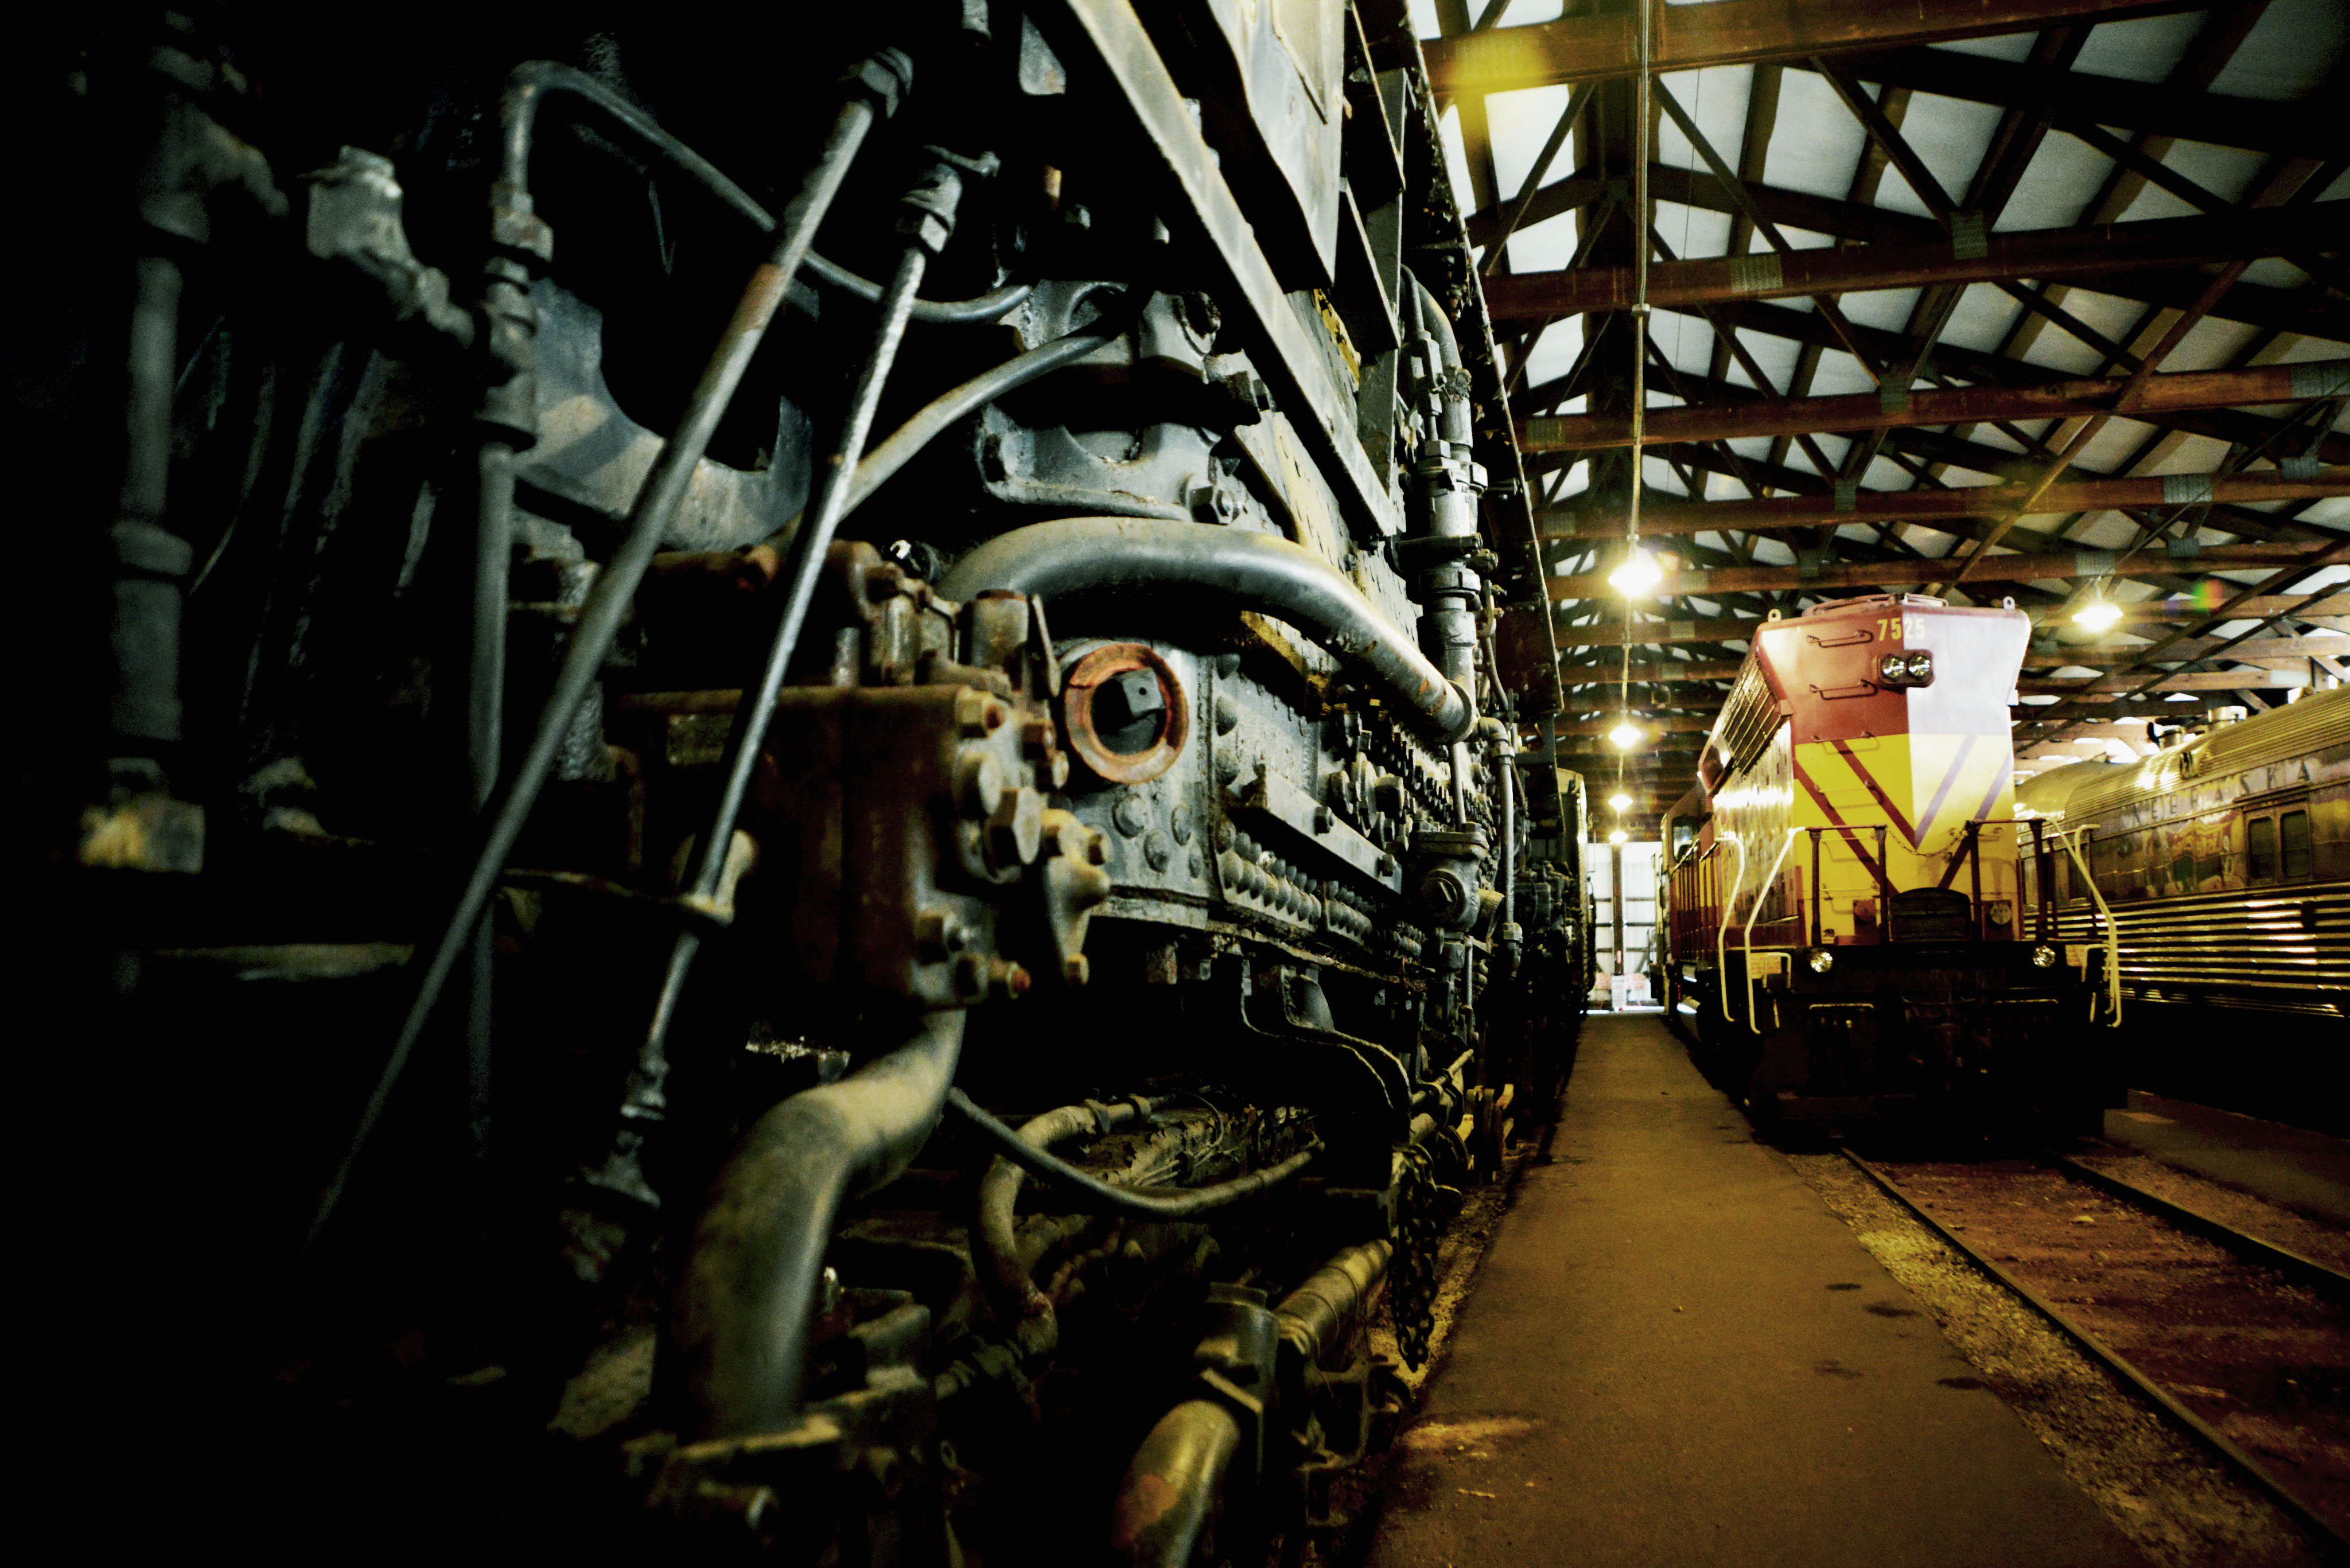 Train in a railyard, railway museum near Chicago